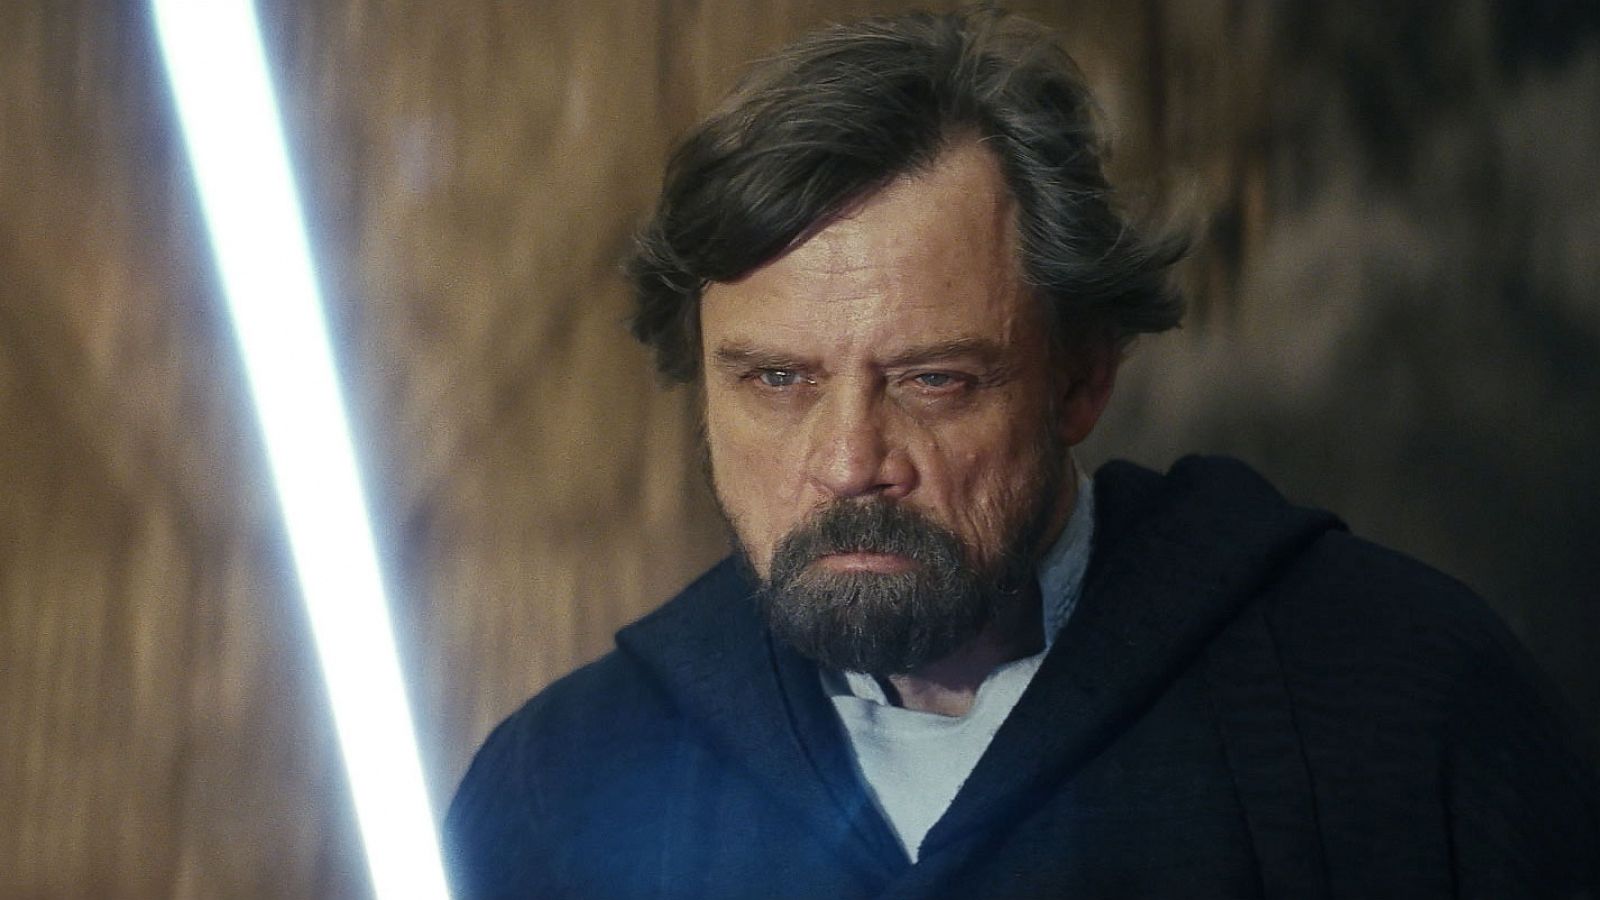 Star Wars' Mark Hamill is happy to be digitally recreated or recast as Luke  Skywalker